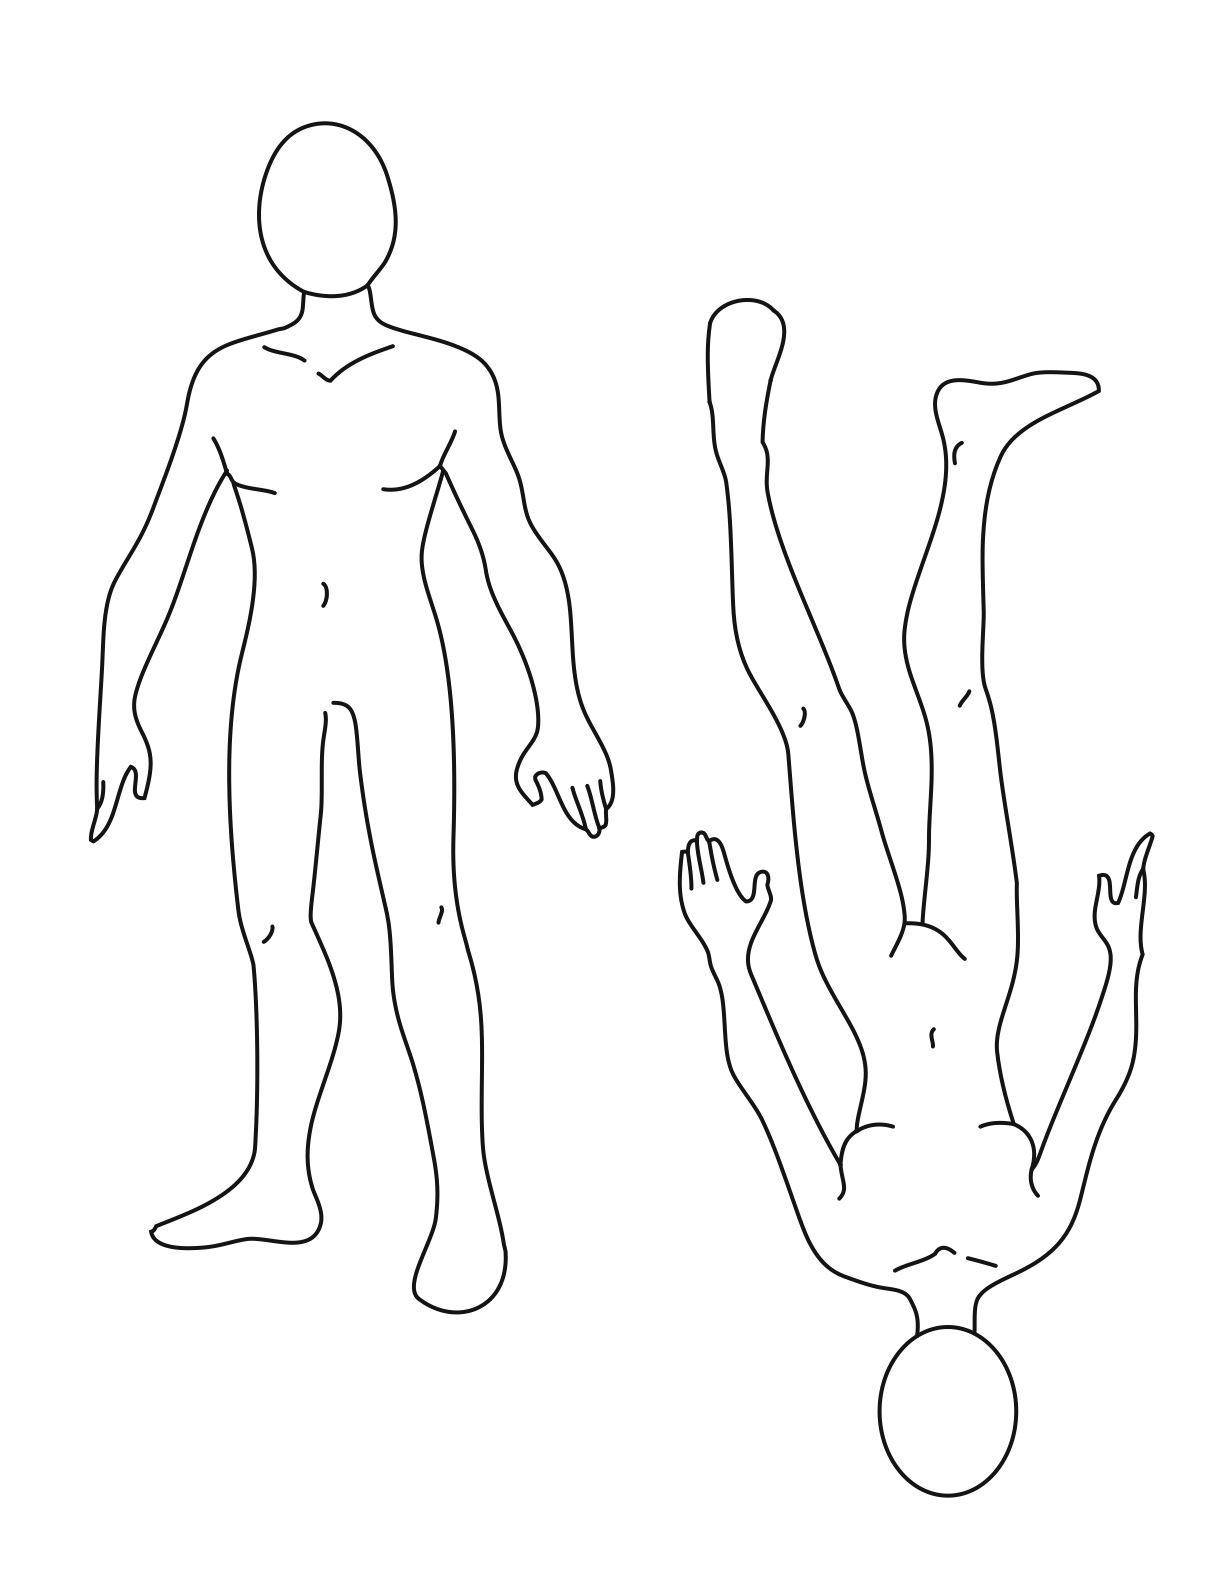 Álvaro Hernández - Anatomy sketches and poses